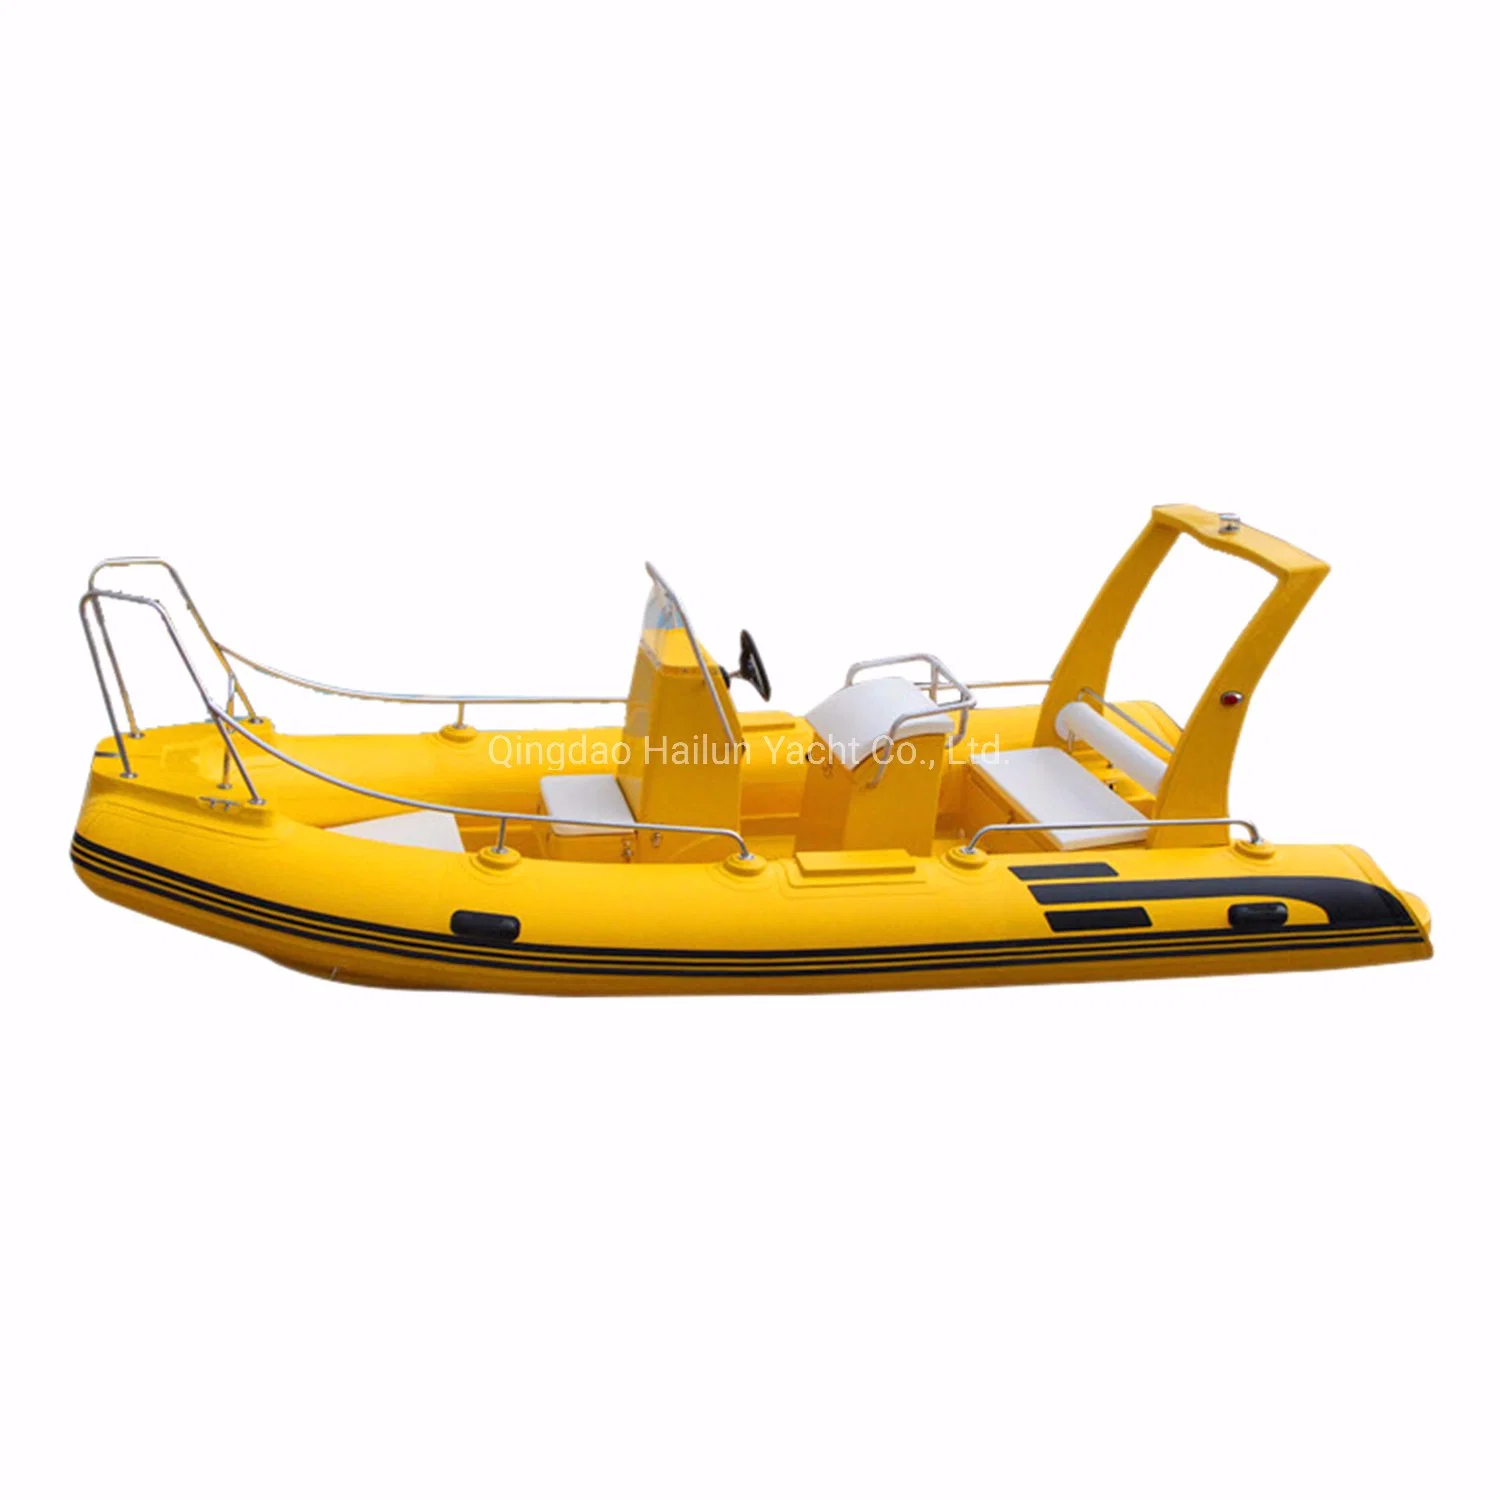 Outboard Motor Rib-520 Inflatable Rib/FRP/Sport/Fishing/Rowing/Fiberglass Boat in China Rib Tube Cruise Boats